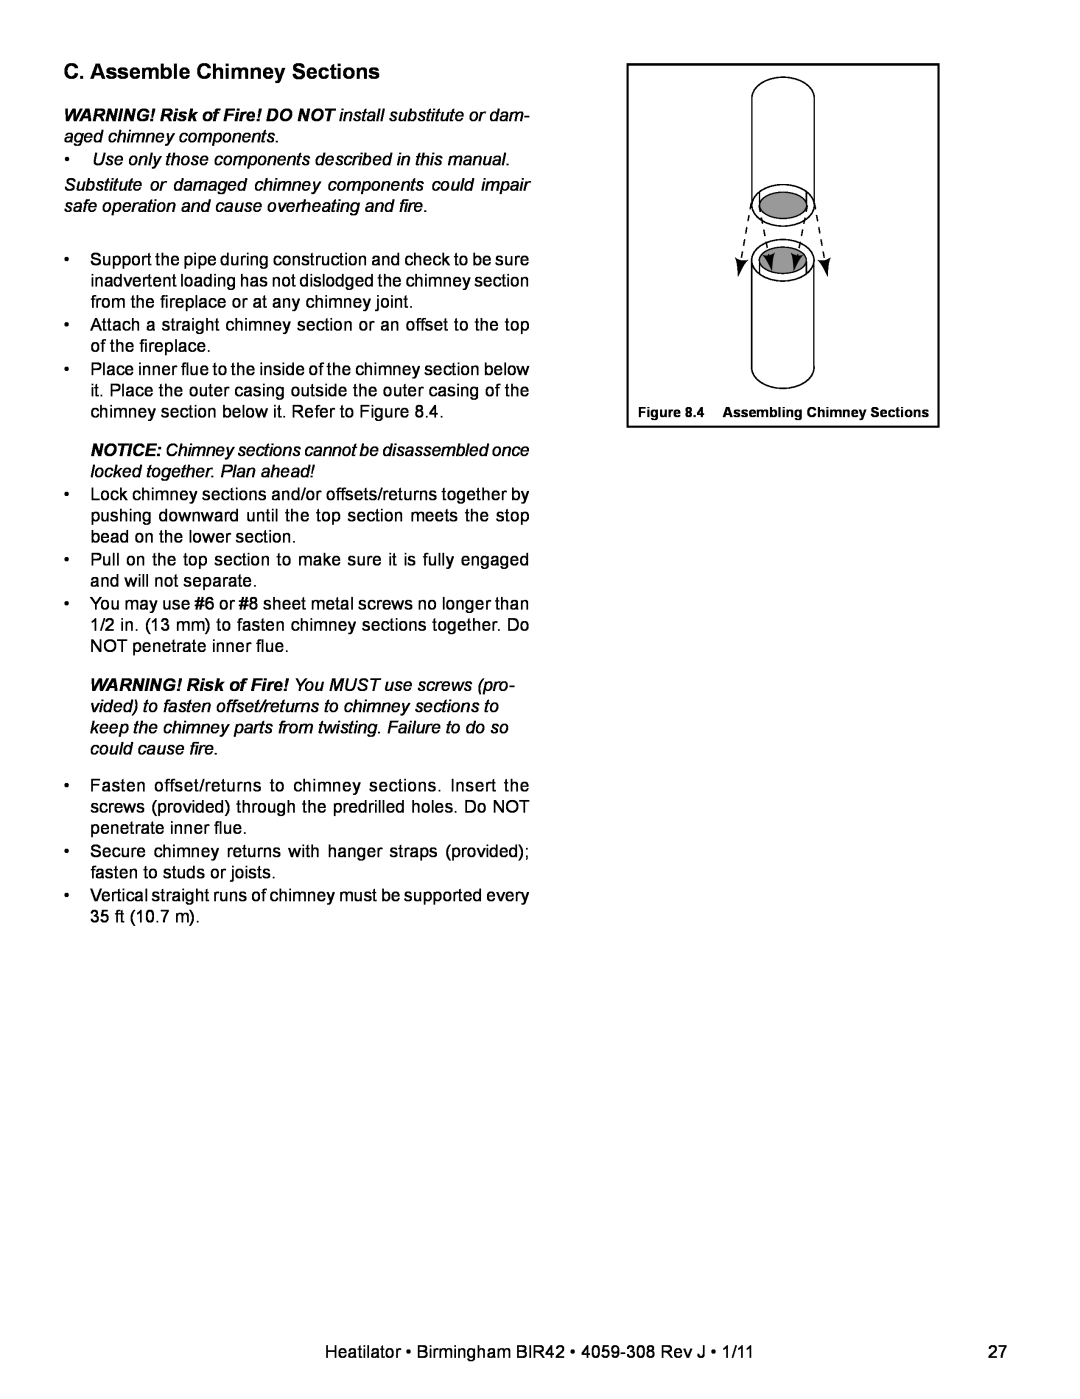 Heatiator BIR42 owner manual C. Assemble Chimney Sections 